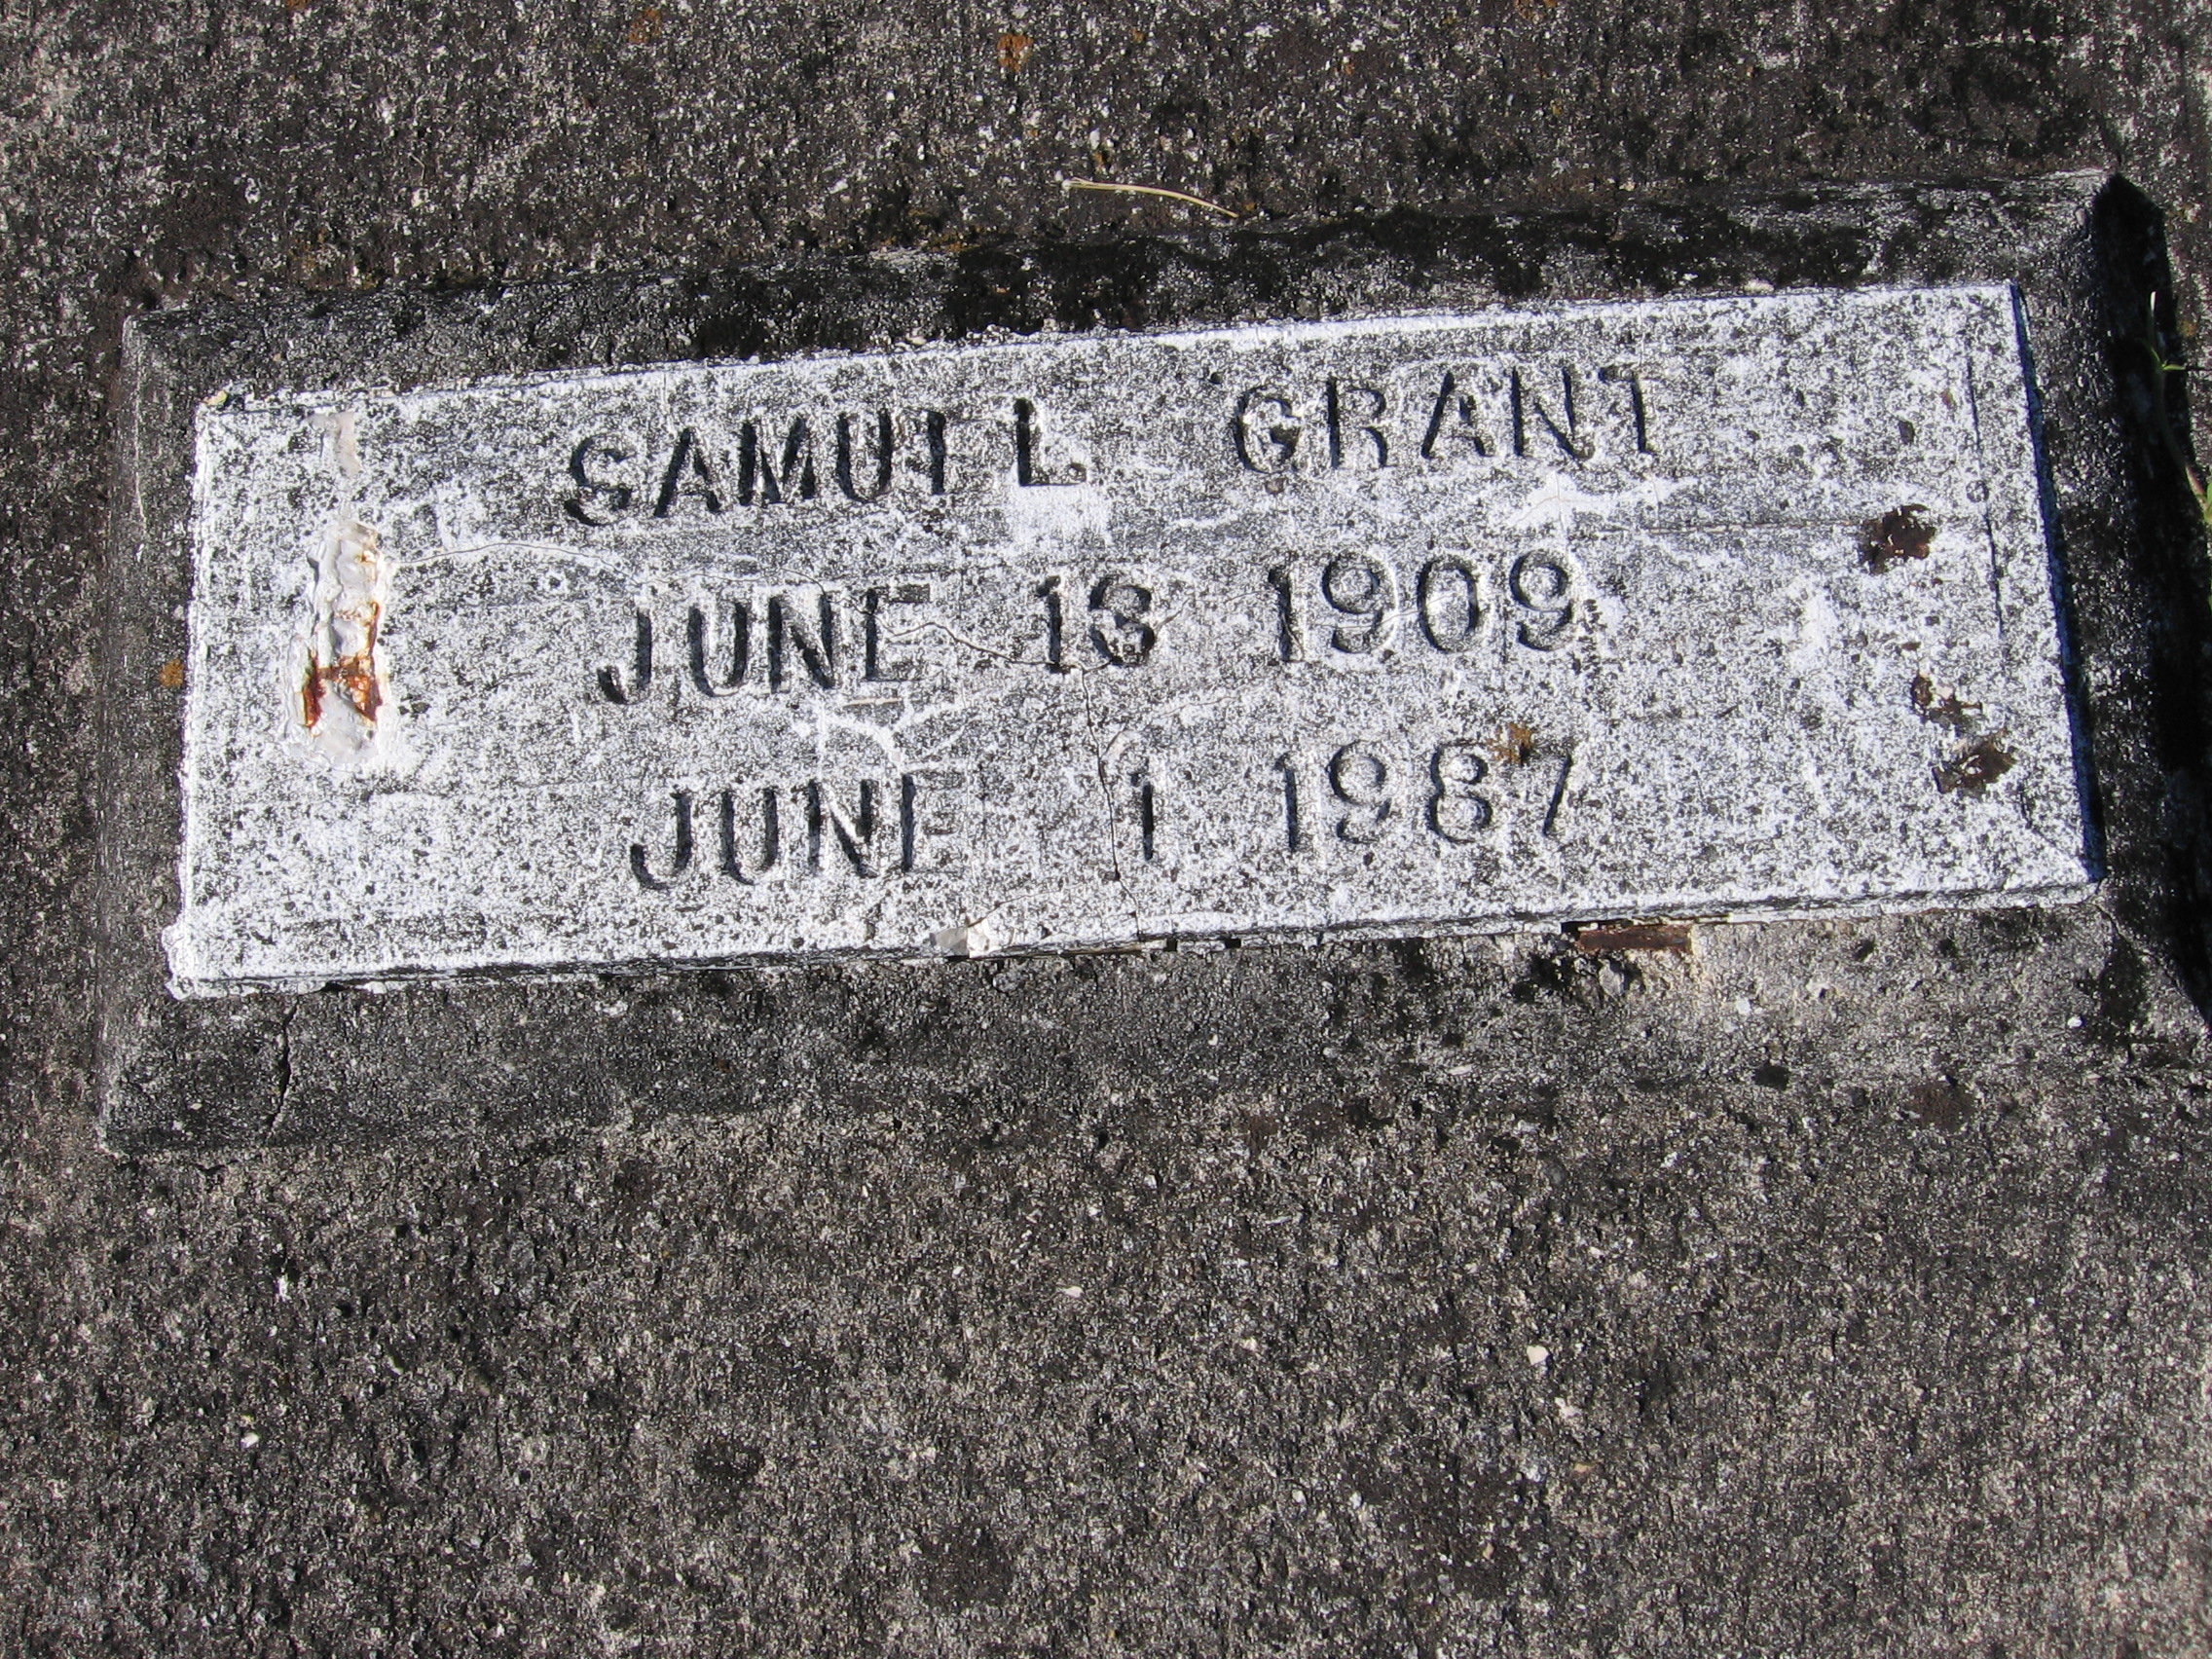 Samuel Grant